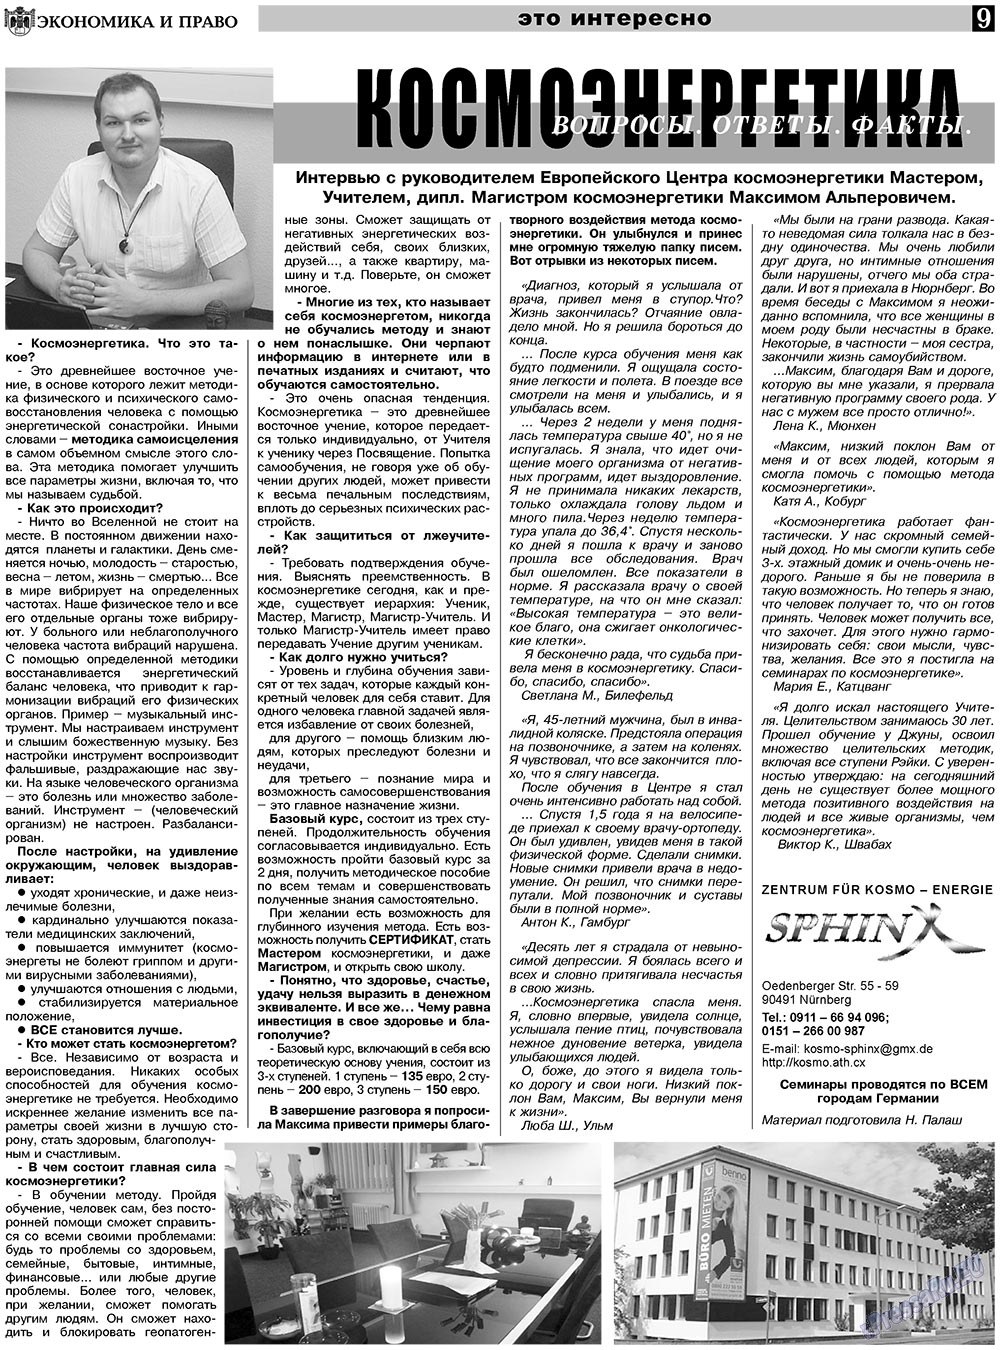 Ekonomika i pravo (Zeitung). 2011 Jahr, Ausgabe 1, Seite 9